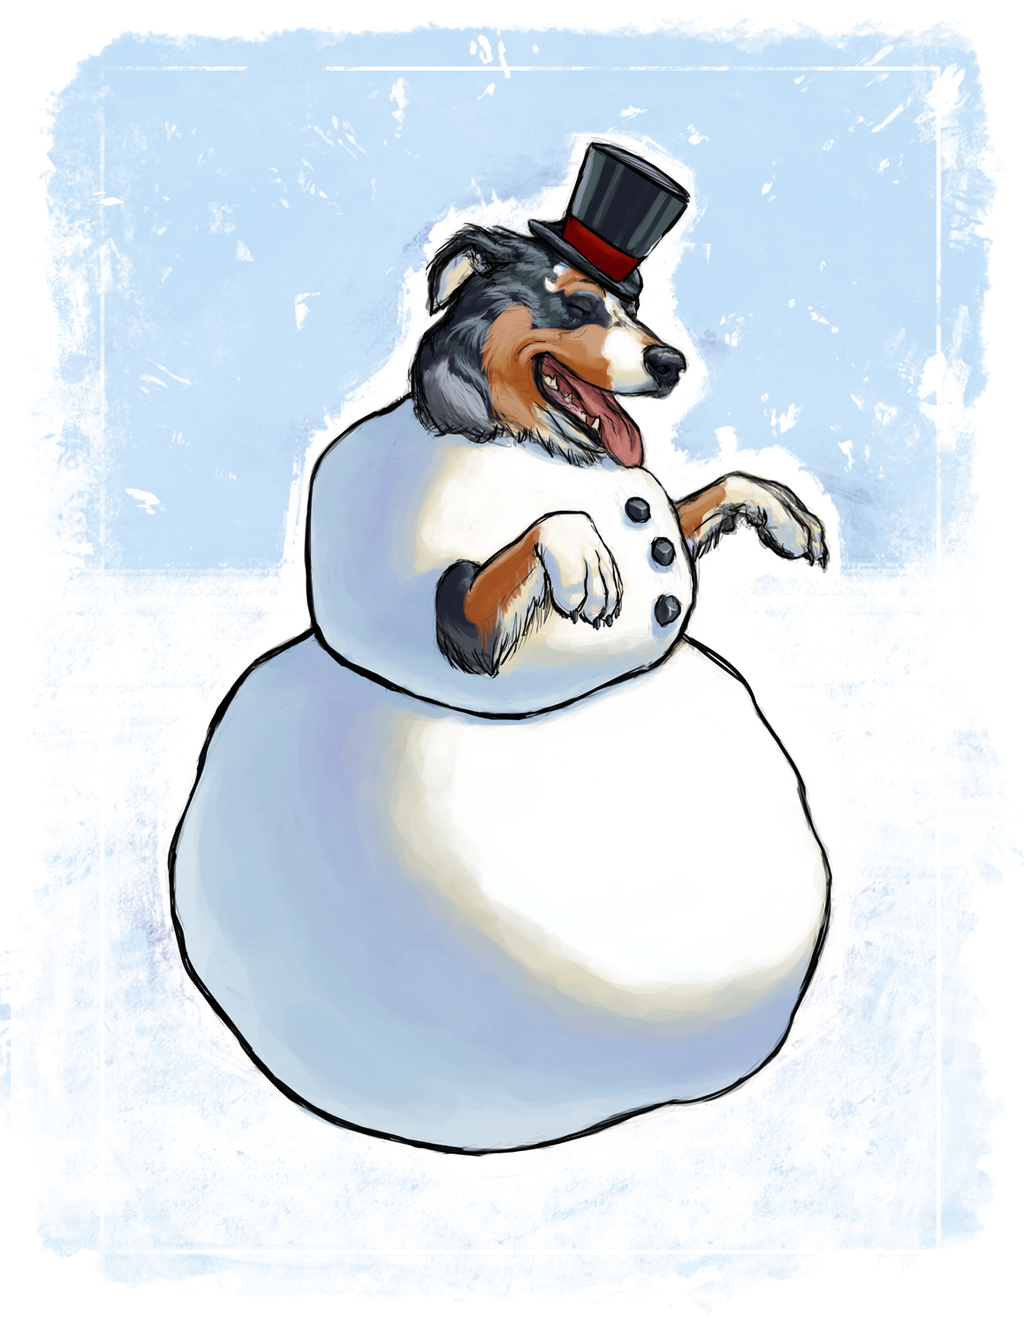 Most recent image: Australian Snowman